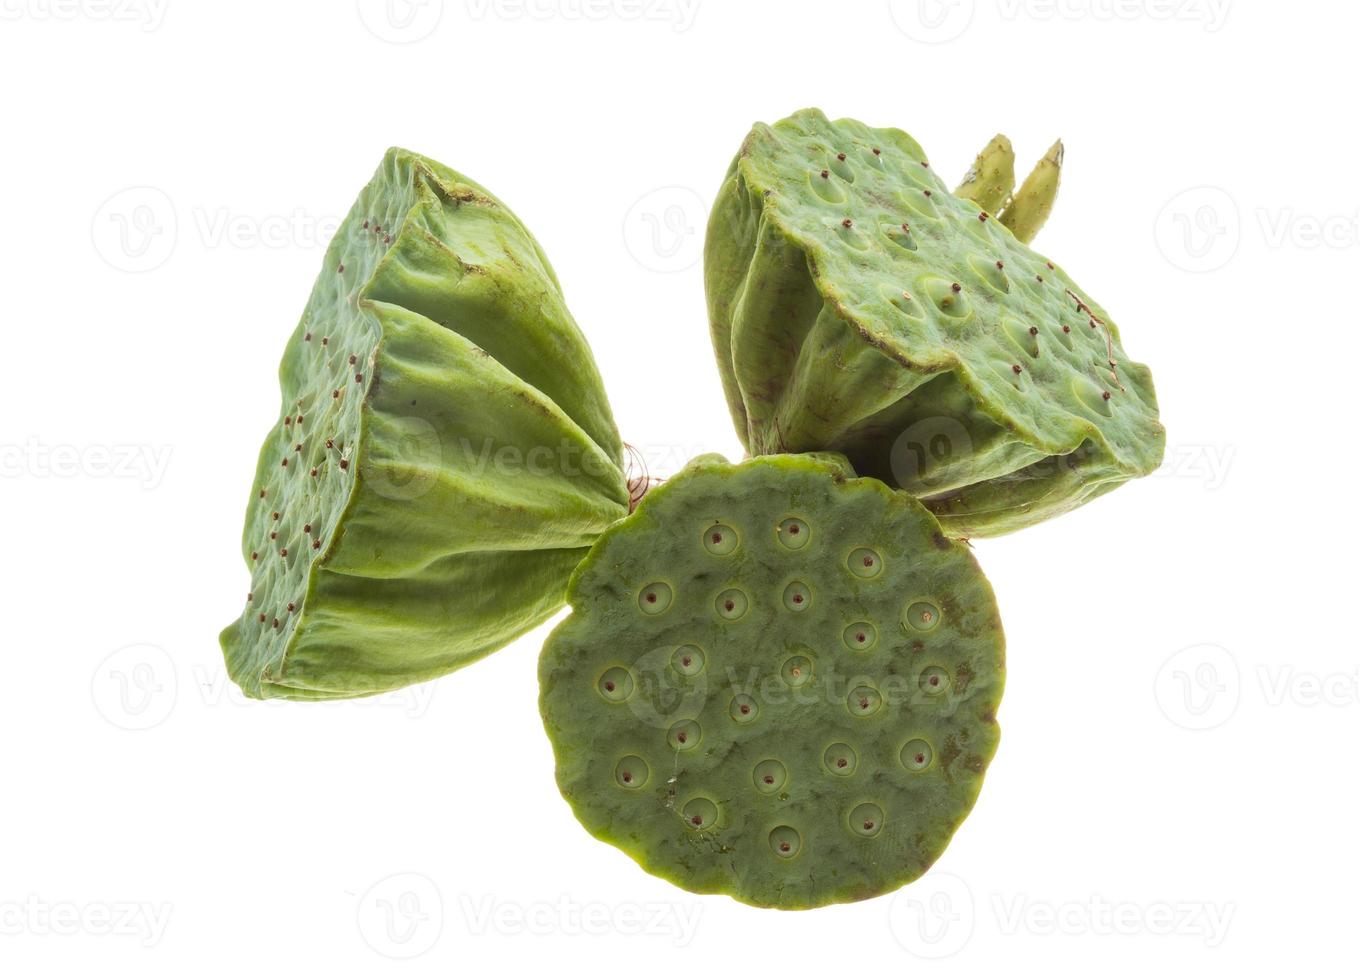 Lotus seeds on white background photo